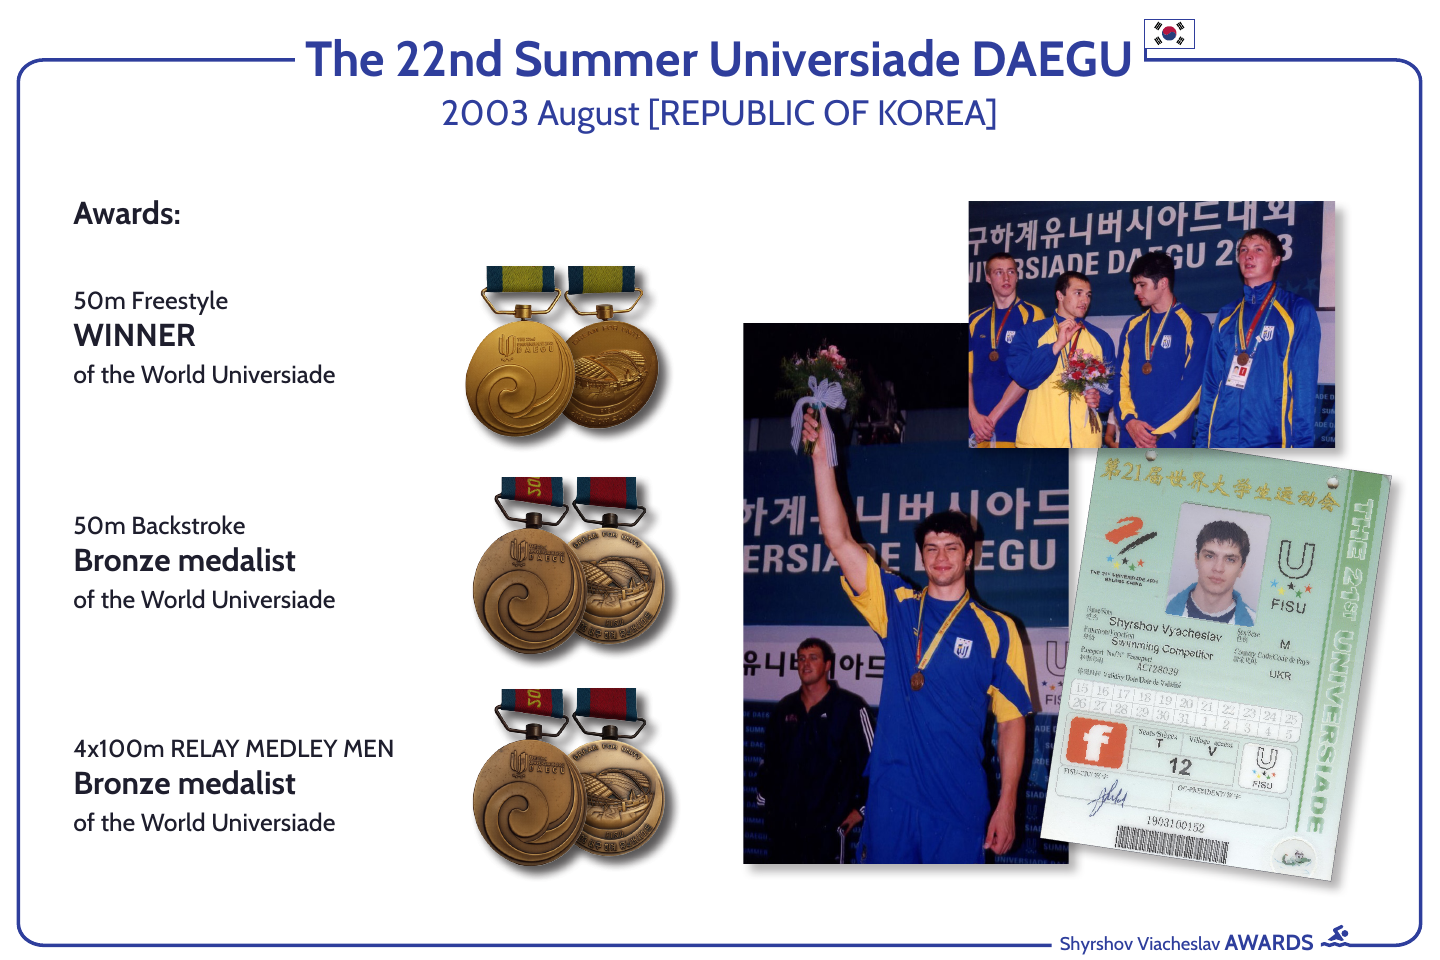 The 22nd Summer Universiade DAEGU 2003